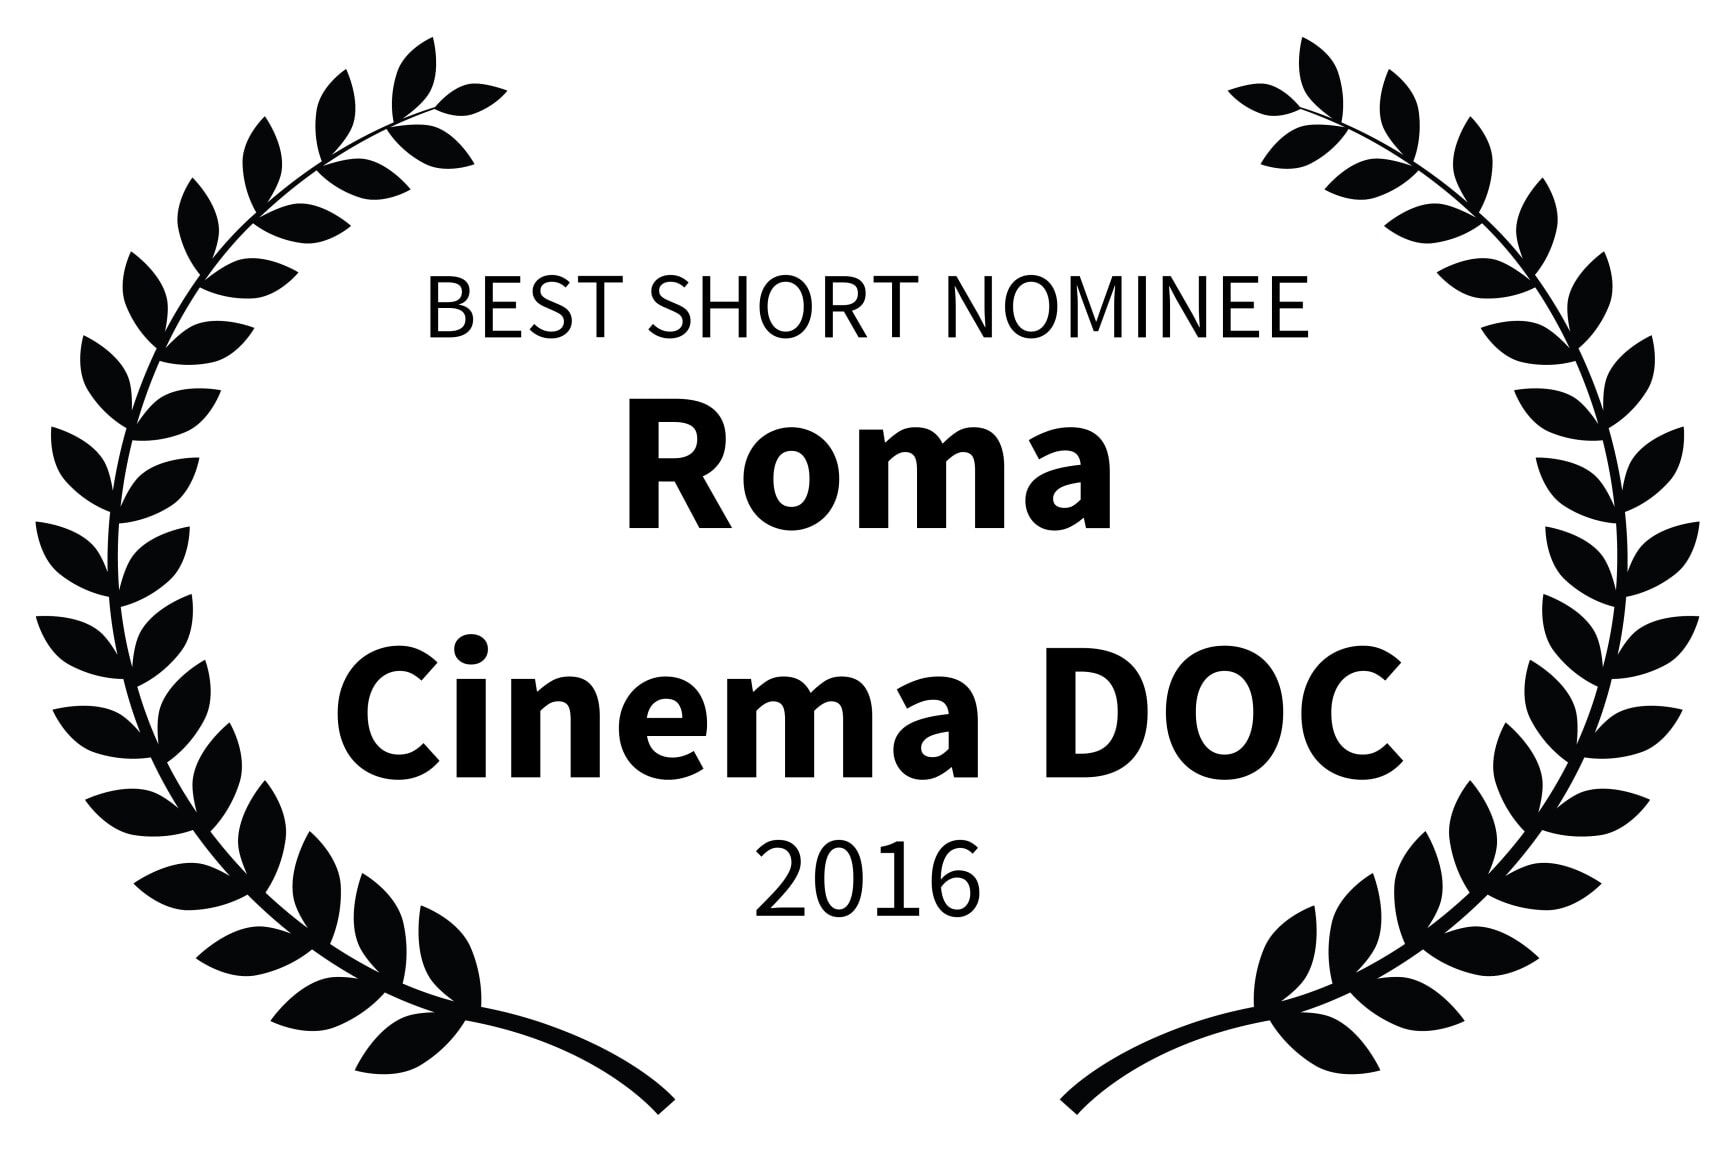 TBEST SHORT NOMINEE - Roma Cinema DOC - 2016